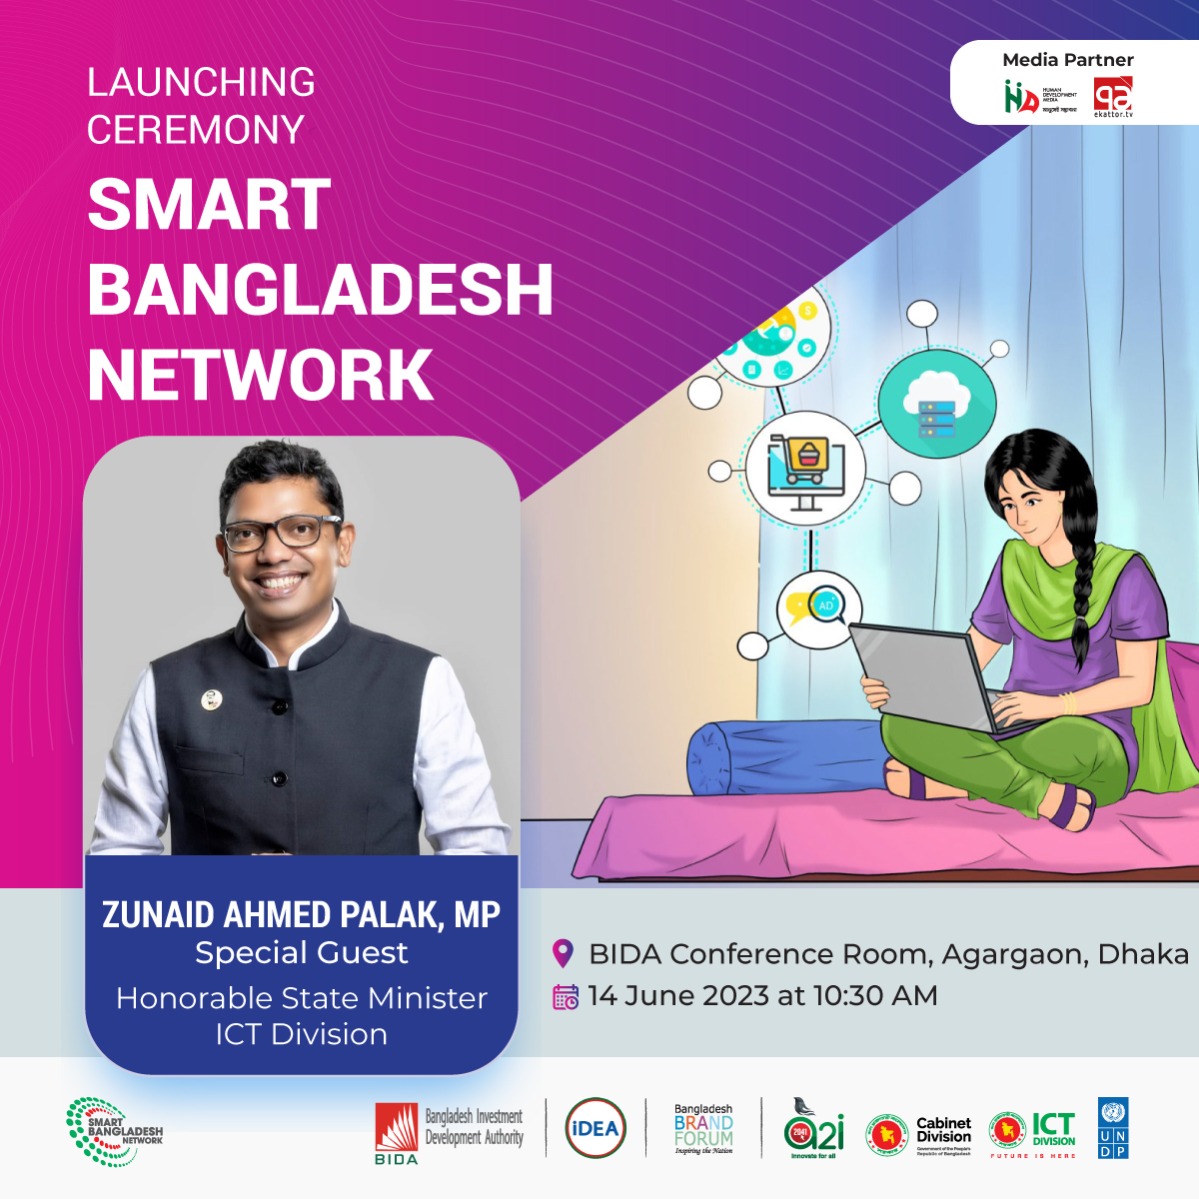 Inauguration of “Smart Bangladesh Network”